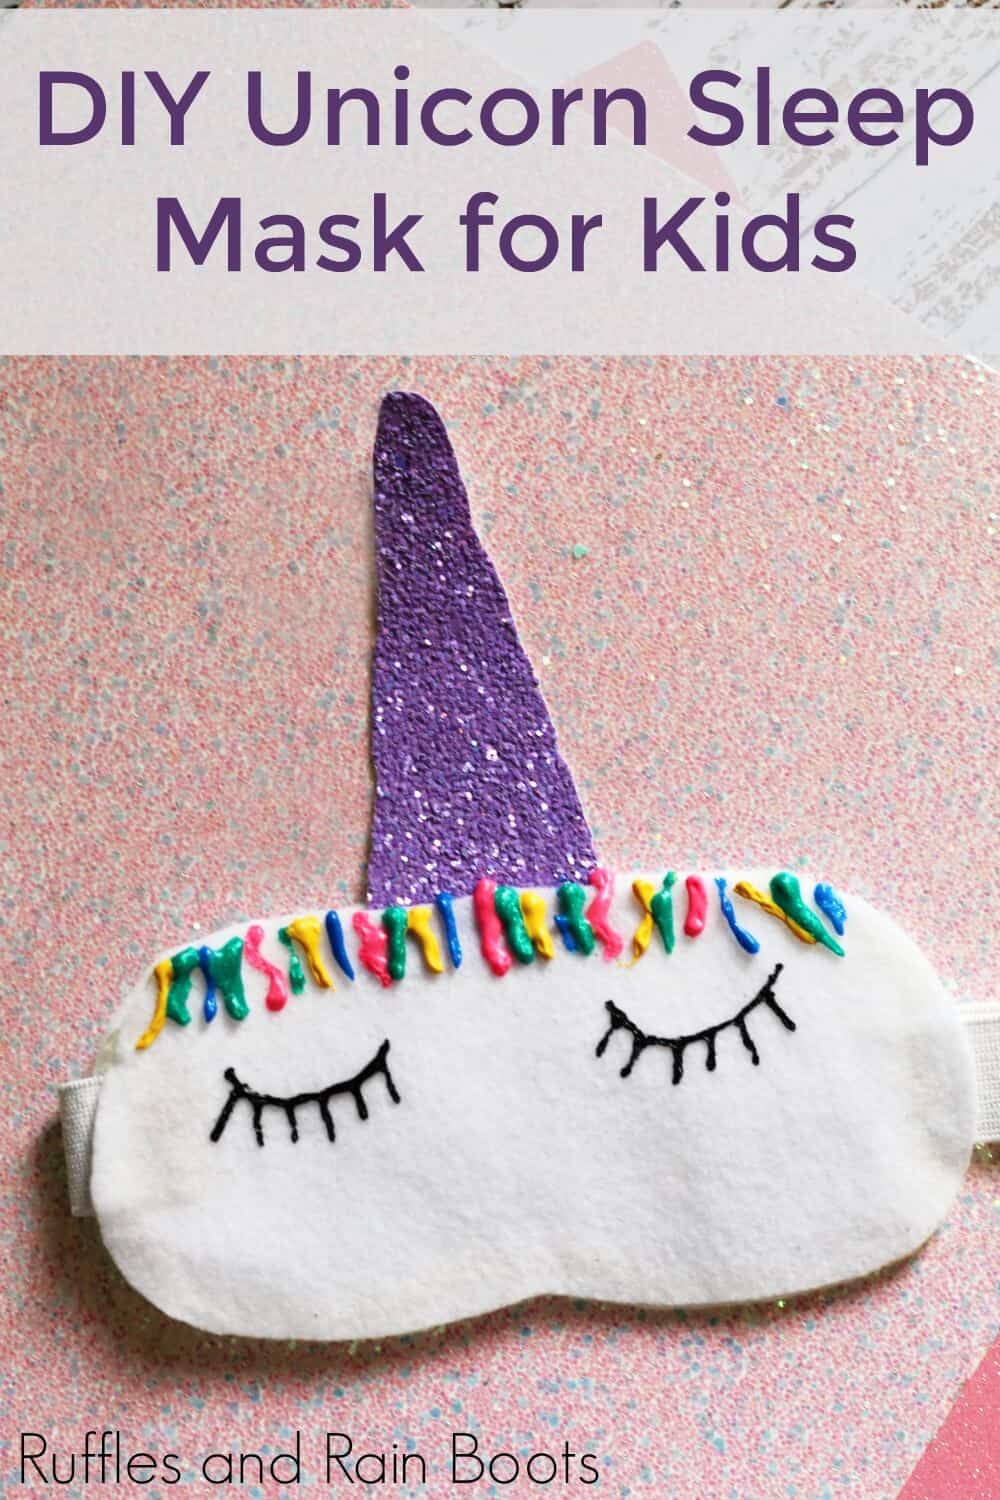 close up of unicorn sleep mask on pink table with text DIY Unicorn Sleep Mask for Kids